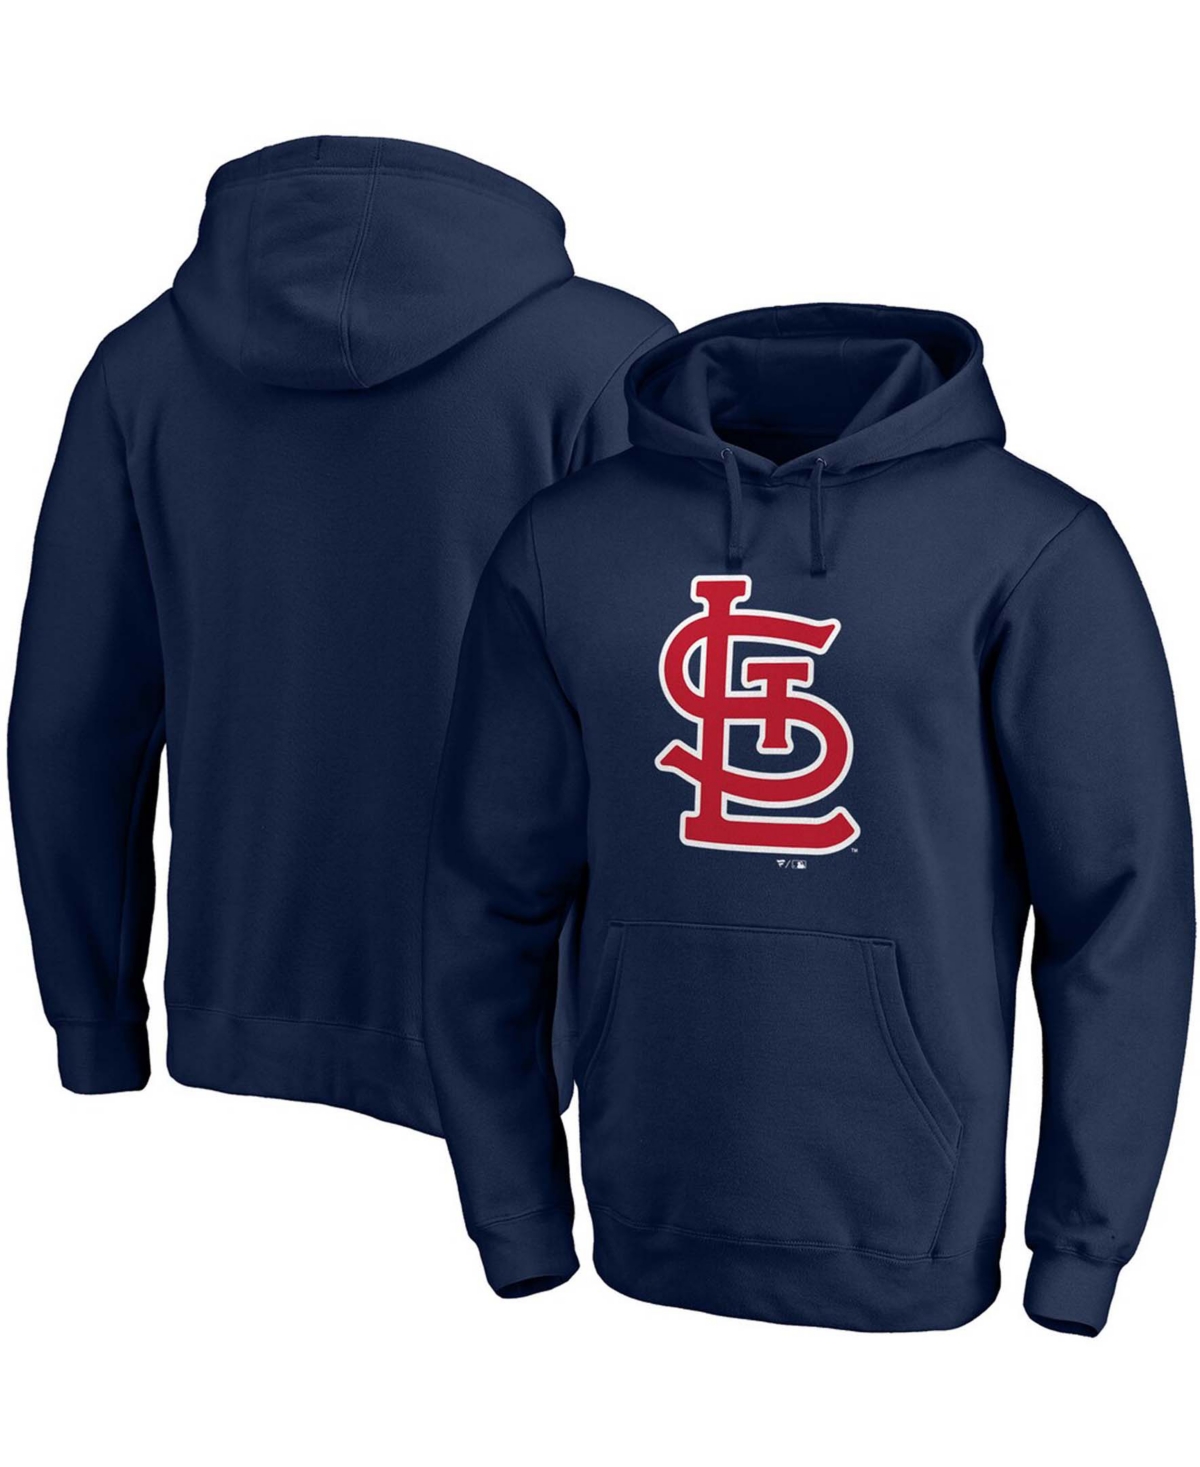 Shop Fanatics Men's Navy St. Louis Cardinals Official Logo Pullover Hoodie